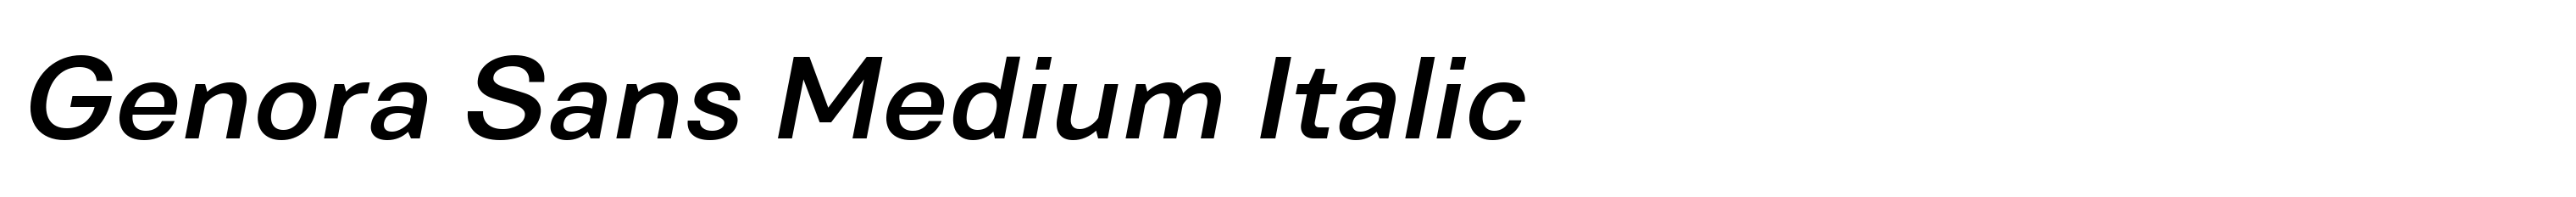 Genora Sans Medium Italic